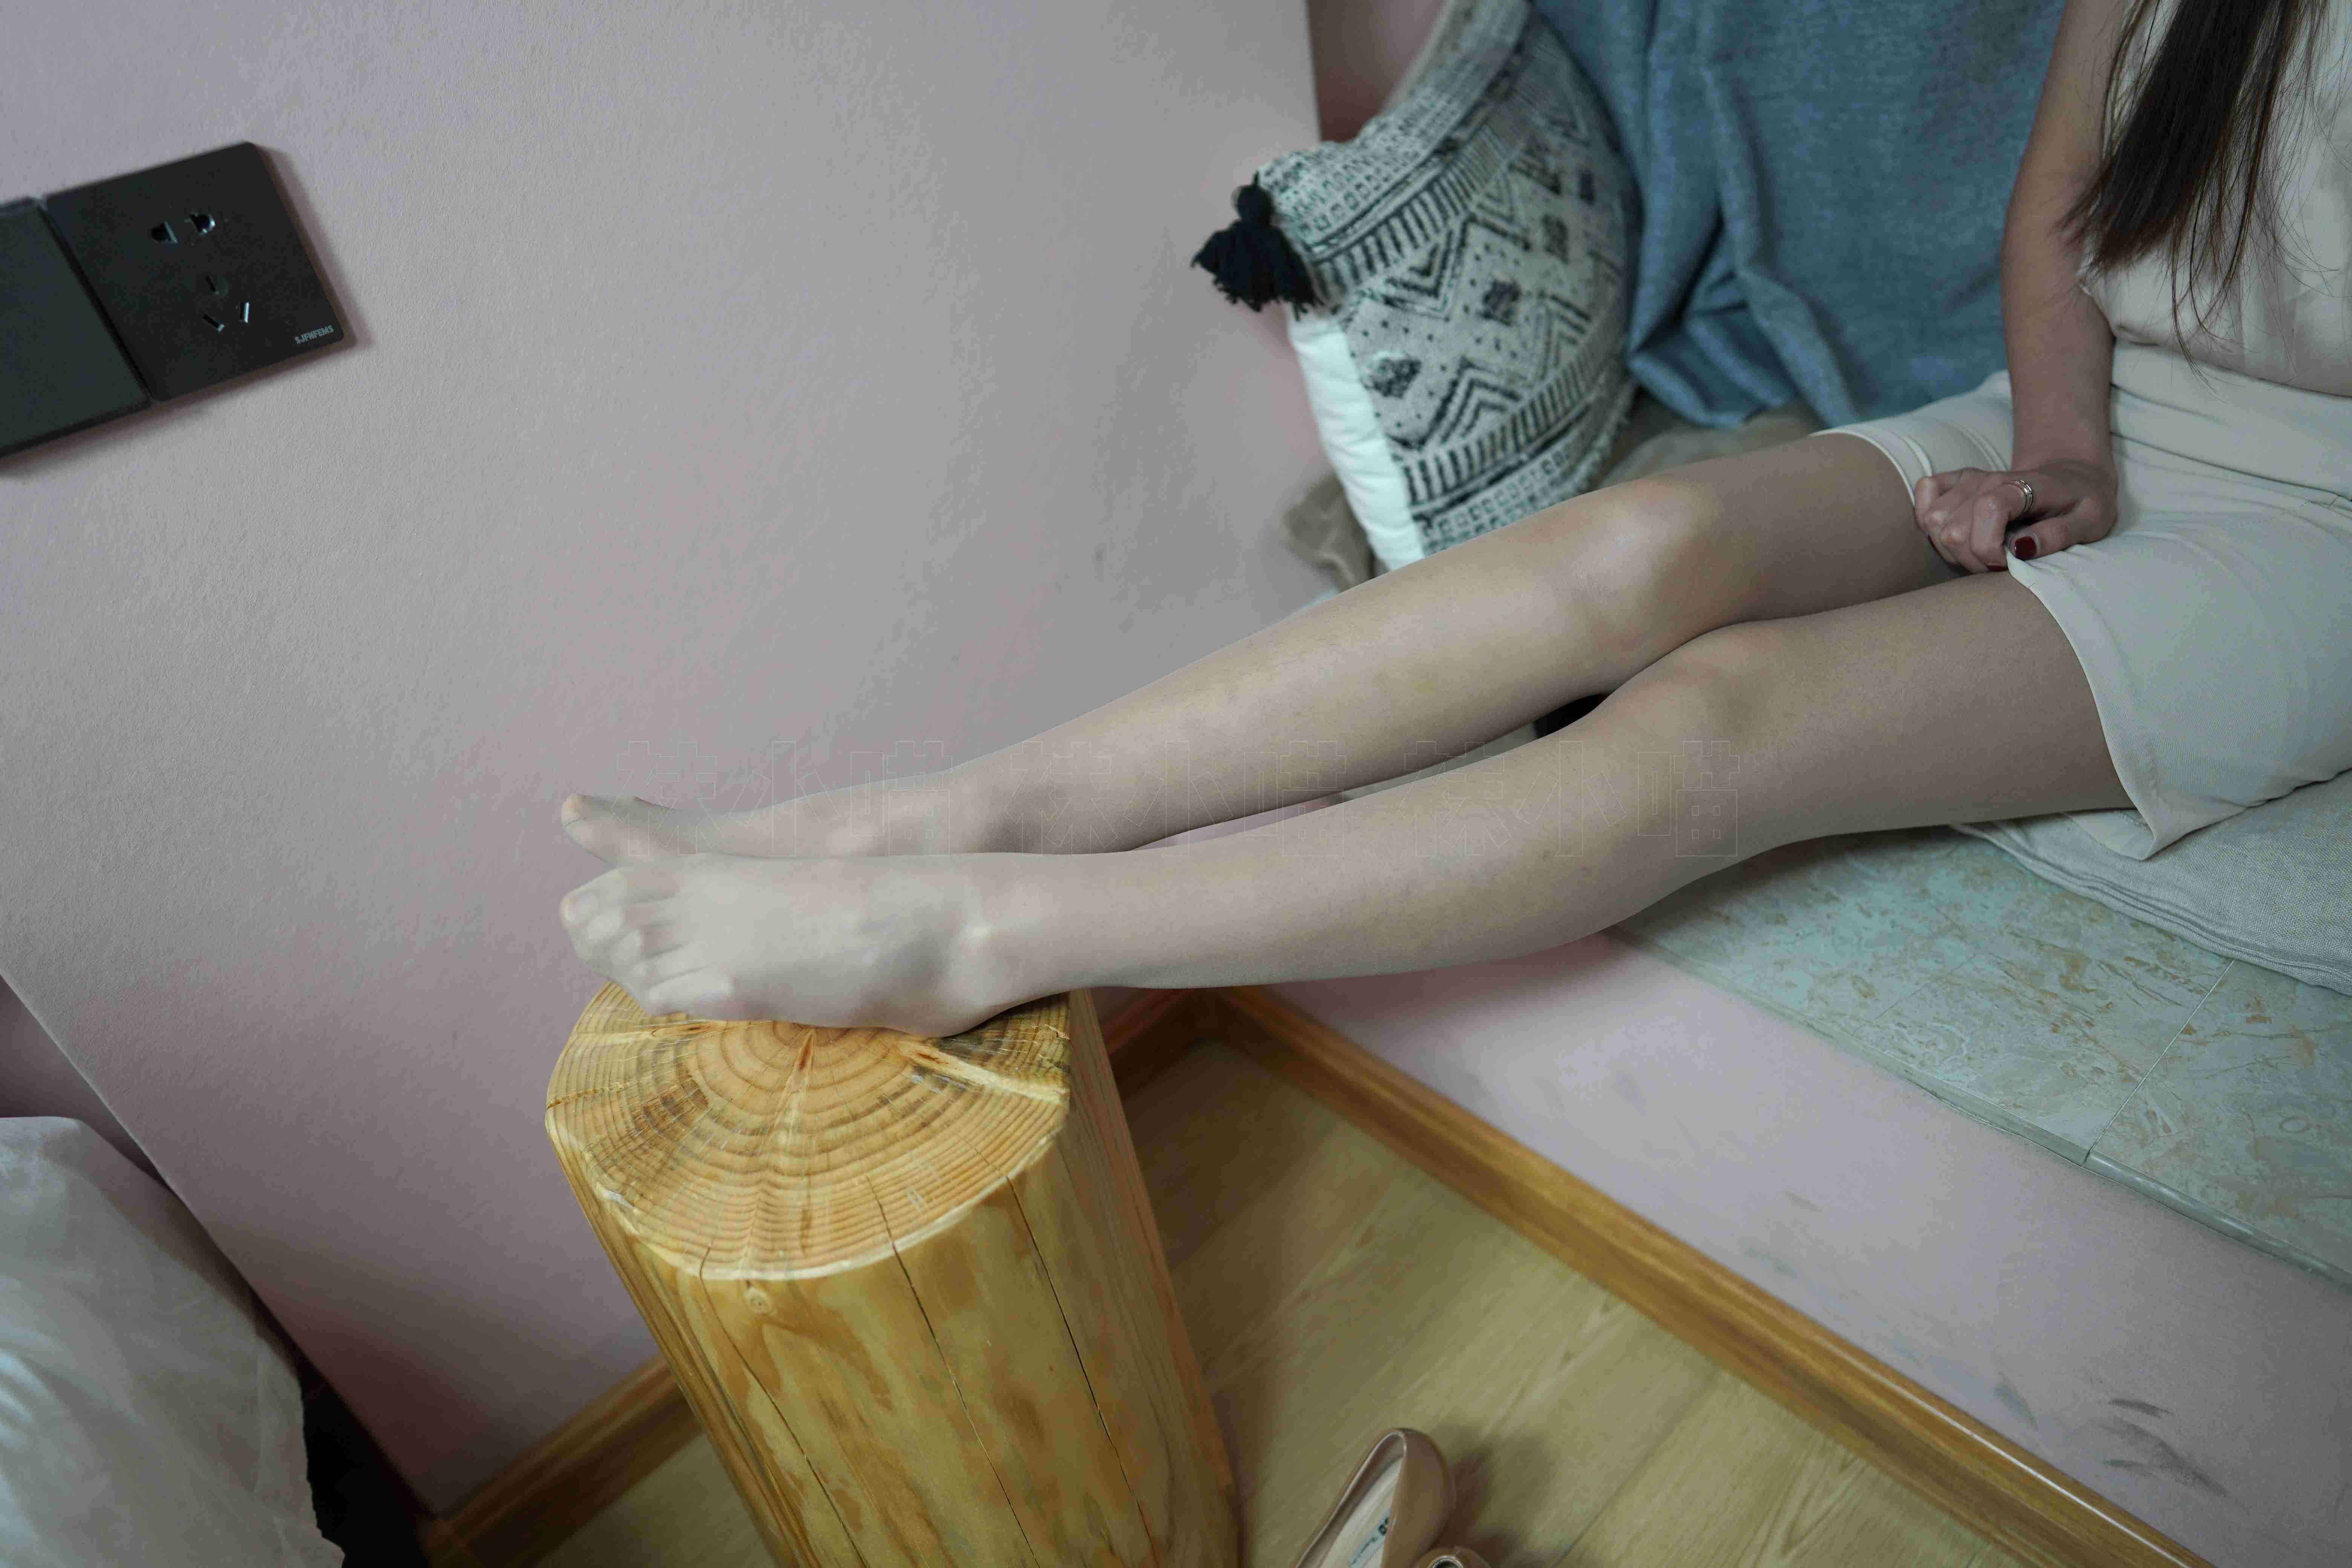 China Beauty Legs and feet 68